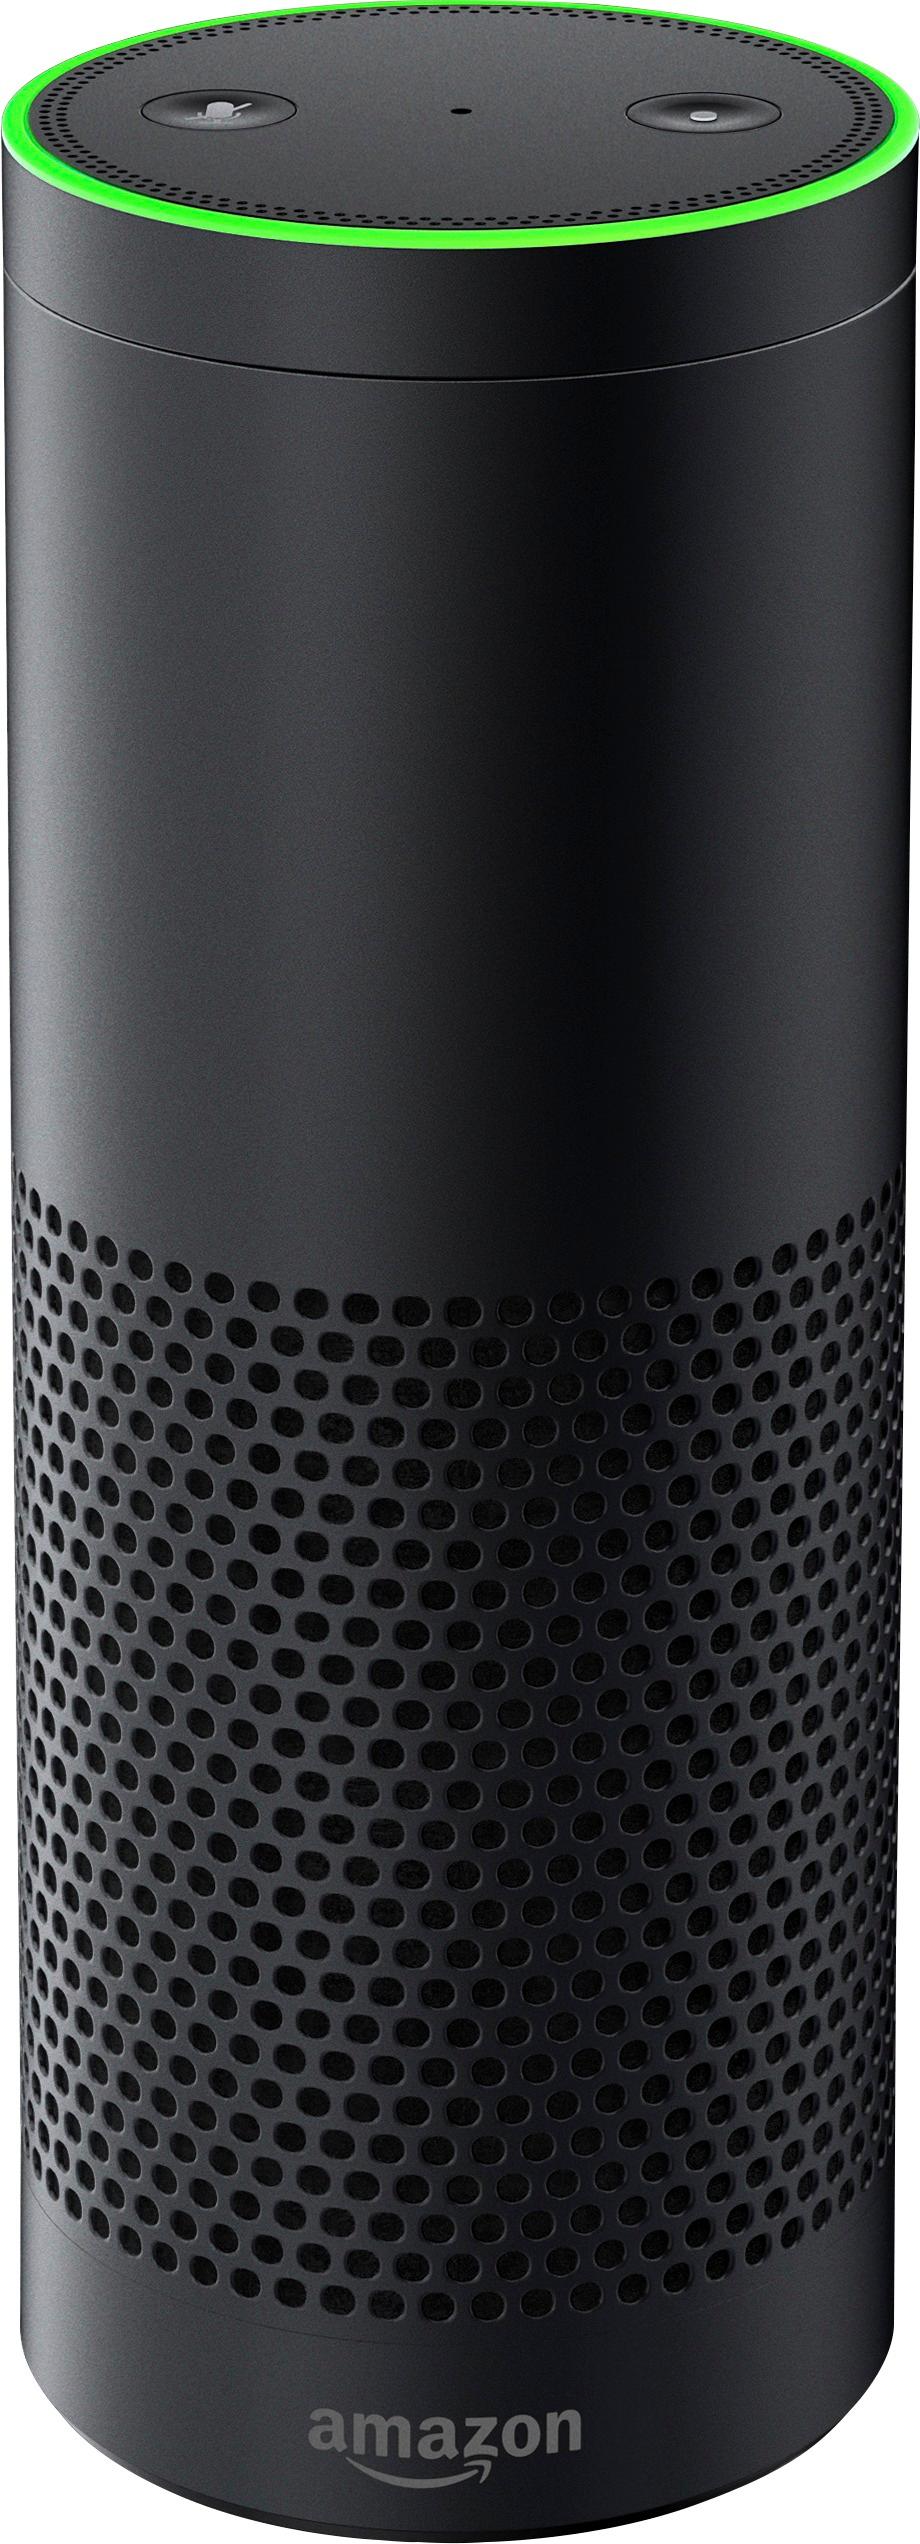 Alexa Personal Assistant Digital Media Streamer Black SEALED NEW Amazon Echo 